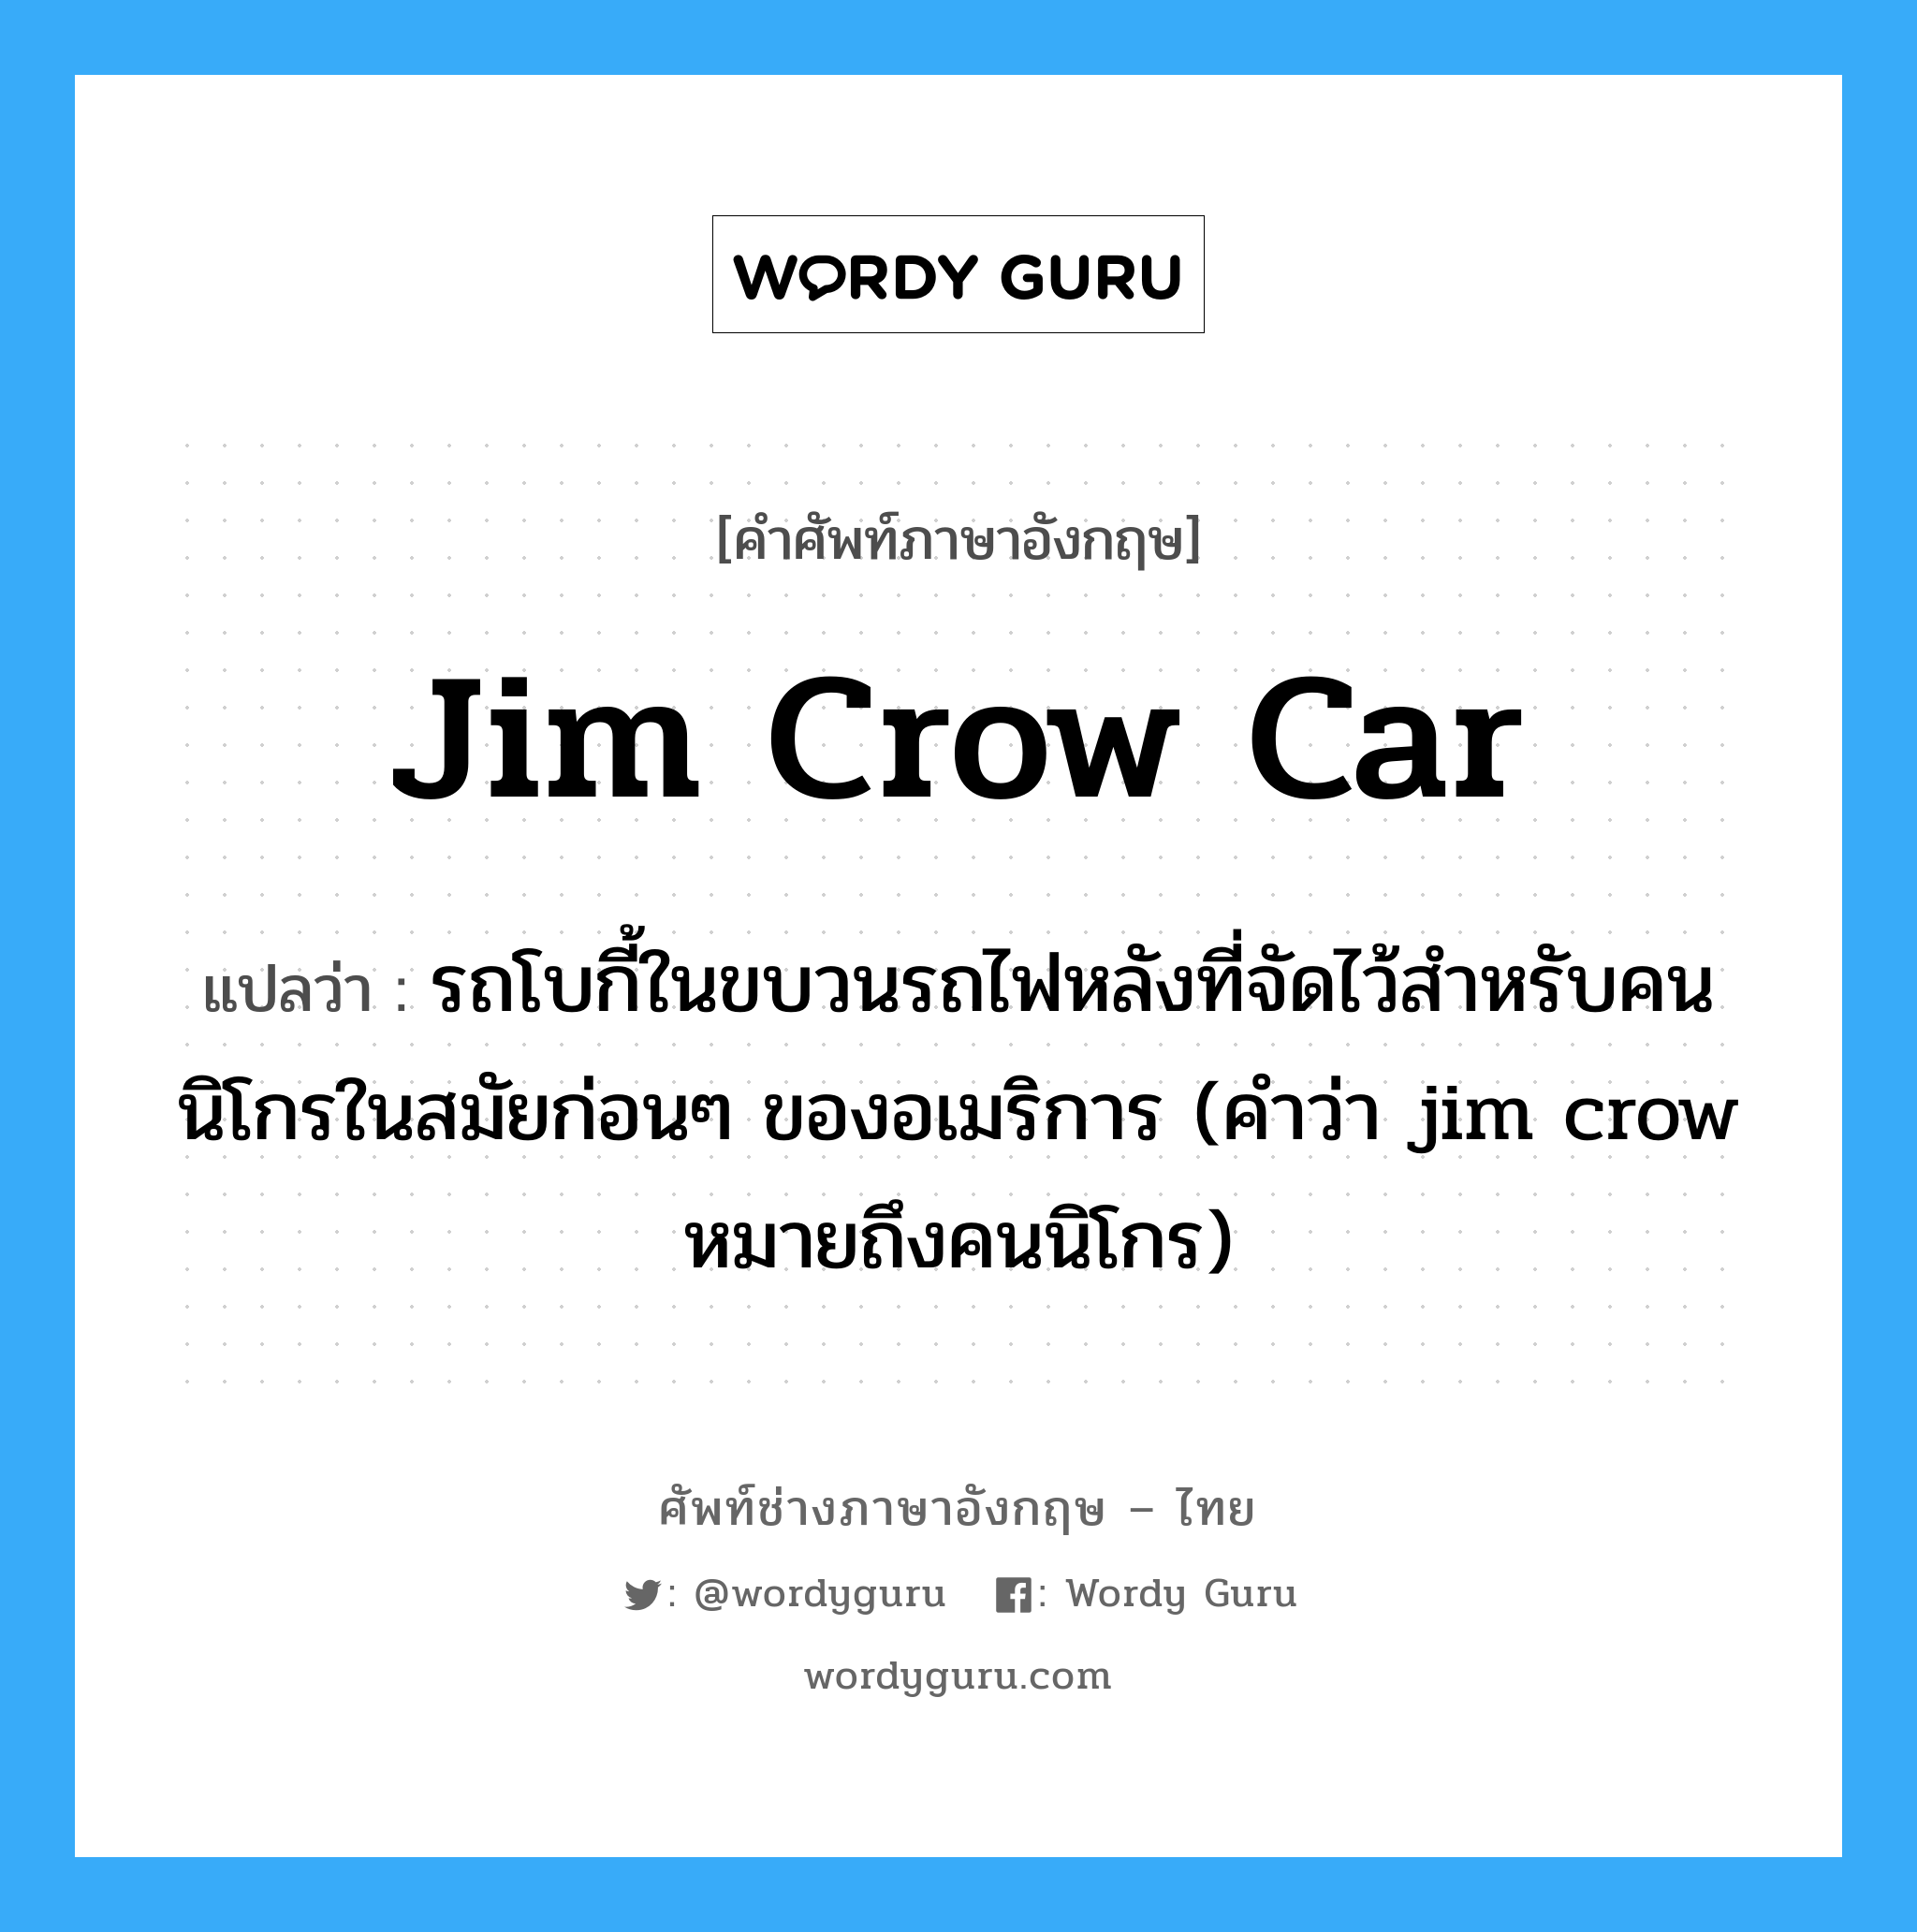 jim crow car แปลว่า?, คำศัพท์ช่างภาษาอังกฤษ - ไทย jim crow car คำศัพท์ภาษาอังกฤษ jim crow car แปลว่า รถโบกี้ในขบวนรถไฟหลังที่จัดไว้สำหรับคนนิโกรในสมัยก่อนๆ ของอเมริการ (คำว่า jim crow หมายถึงคนนิโกร)